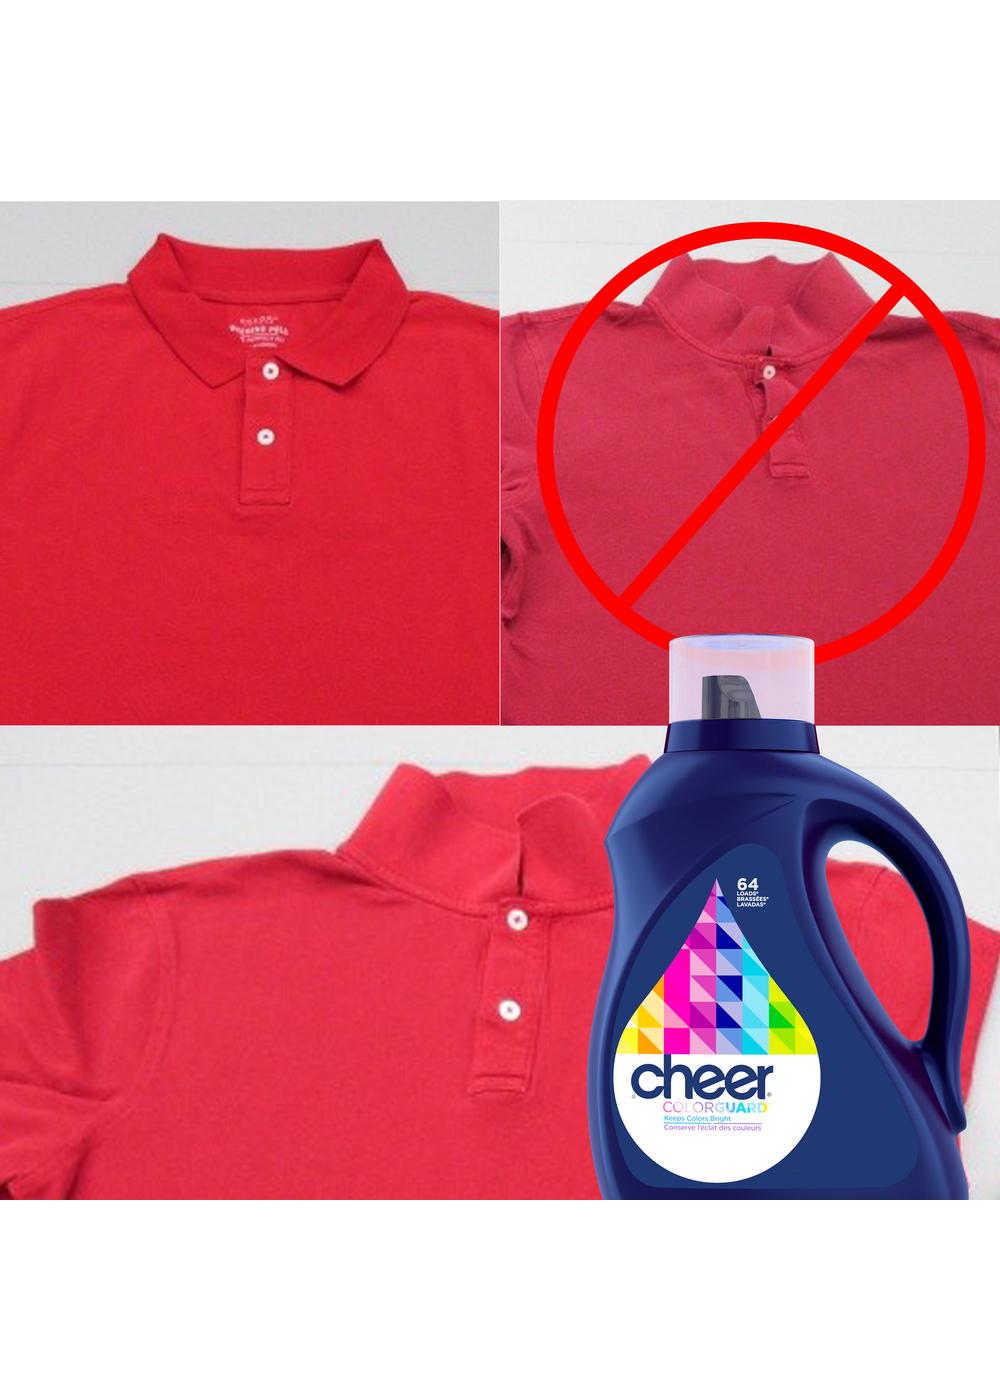 Cheer Colorguard HE Liquid Laundry Detergent, 64 Loads; image 7 of 7